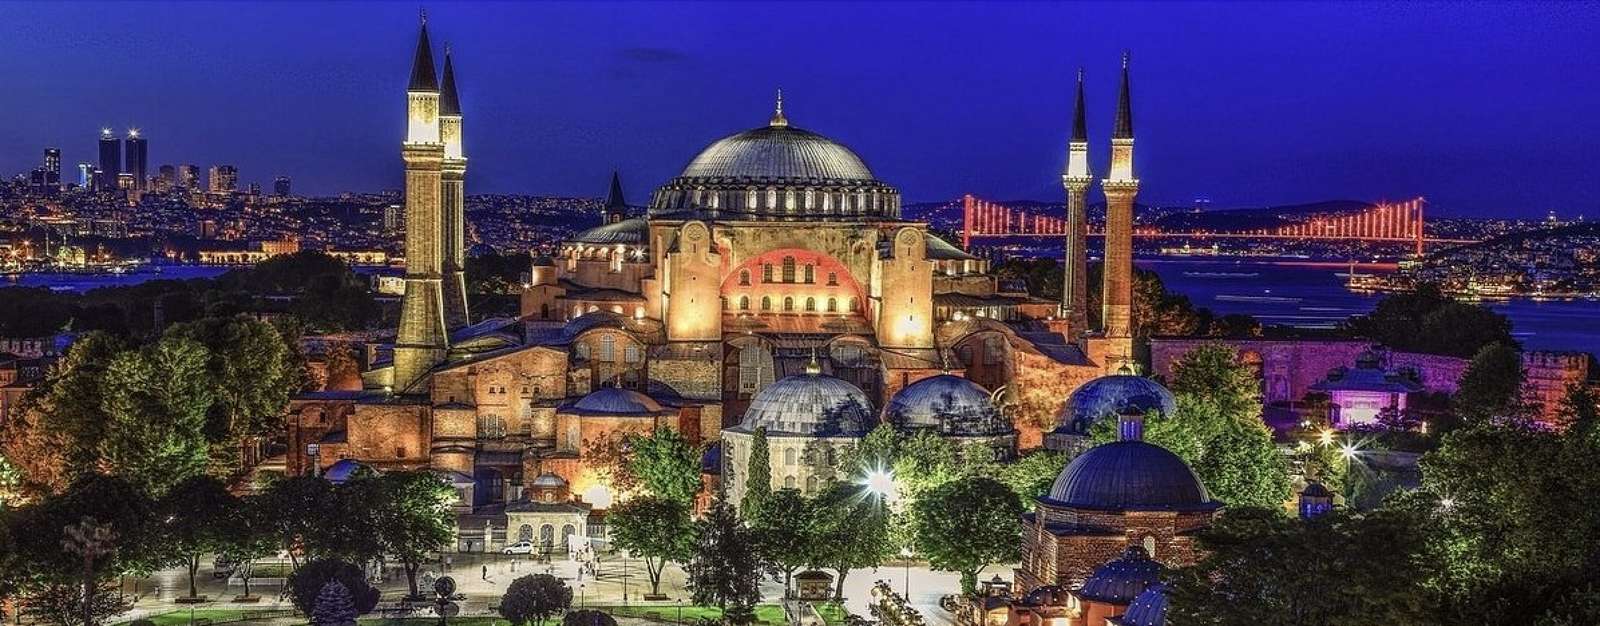 Hagia Sofia, Turkey puzzle online from photo